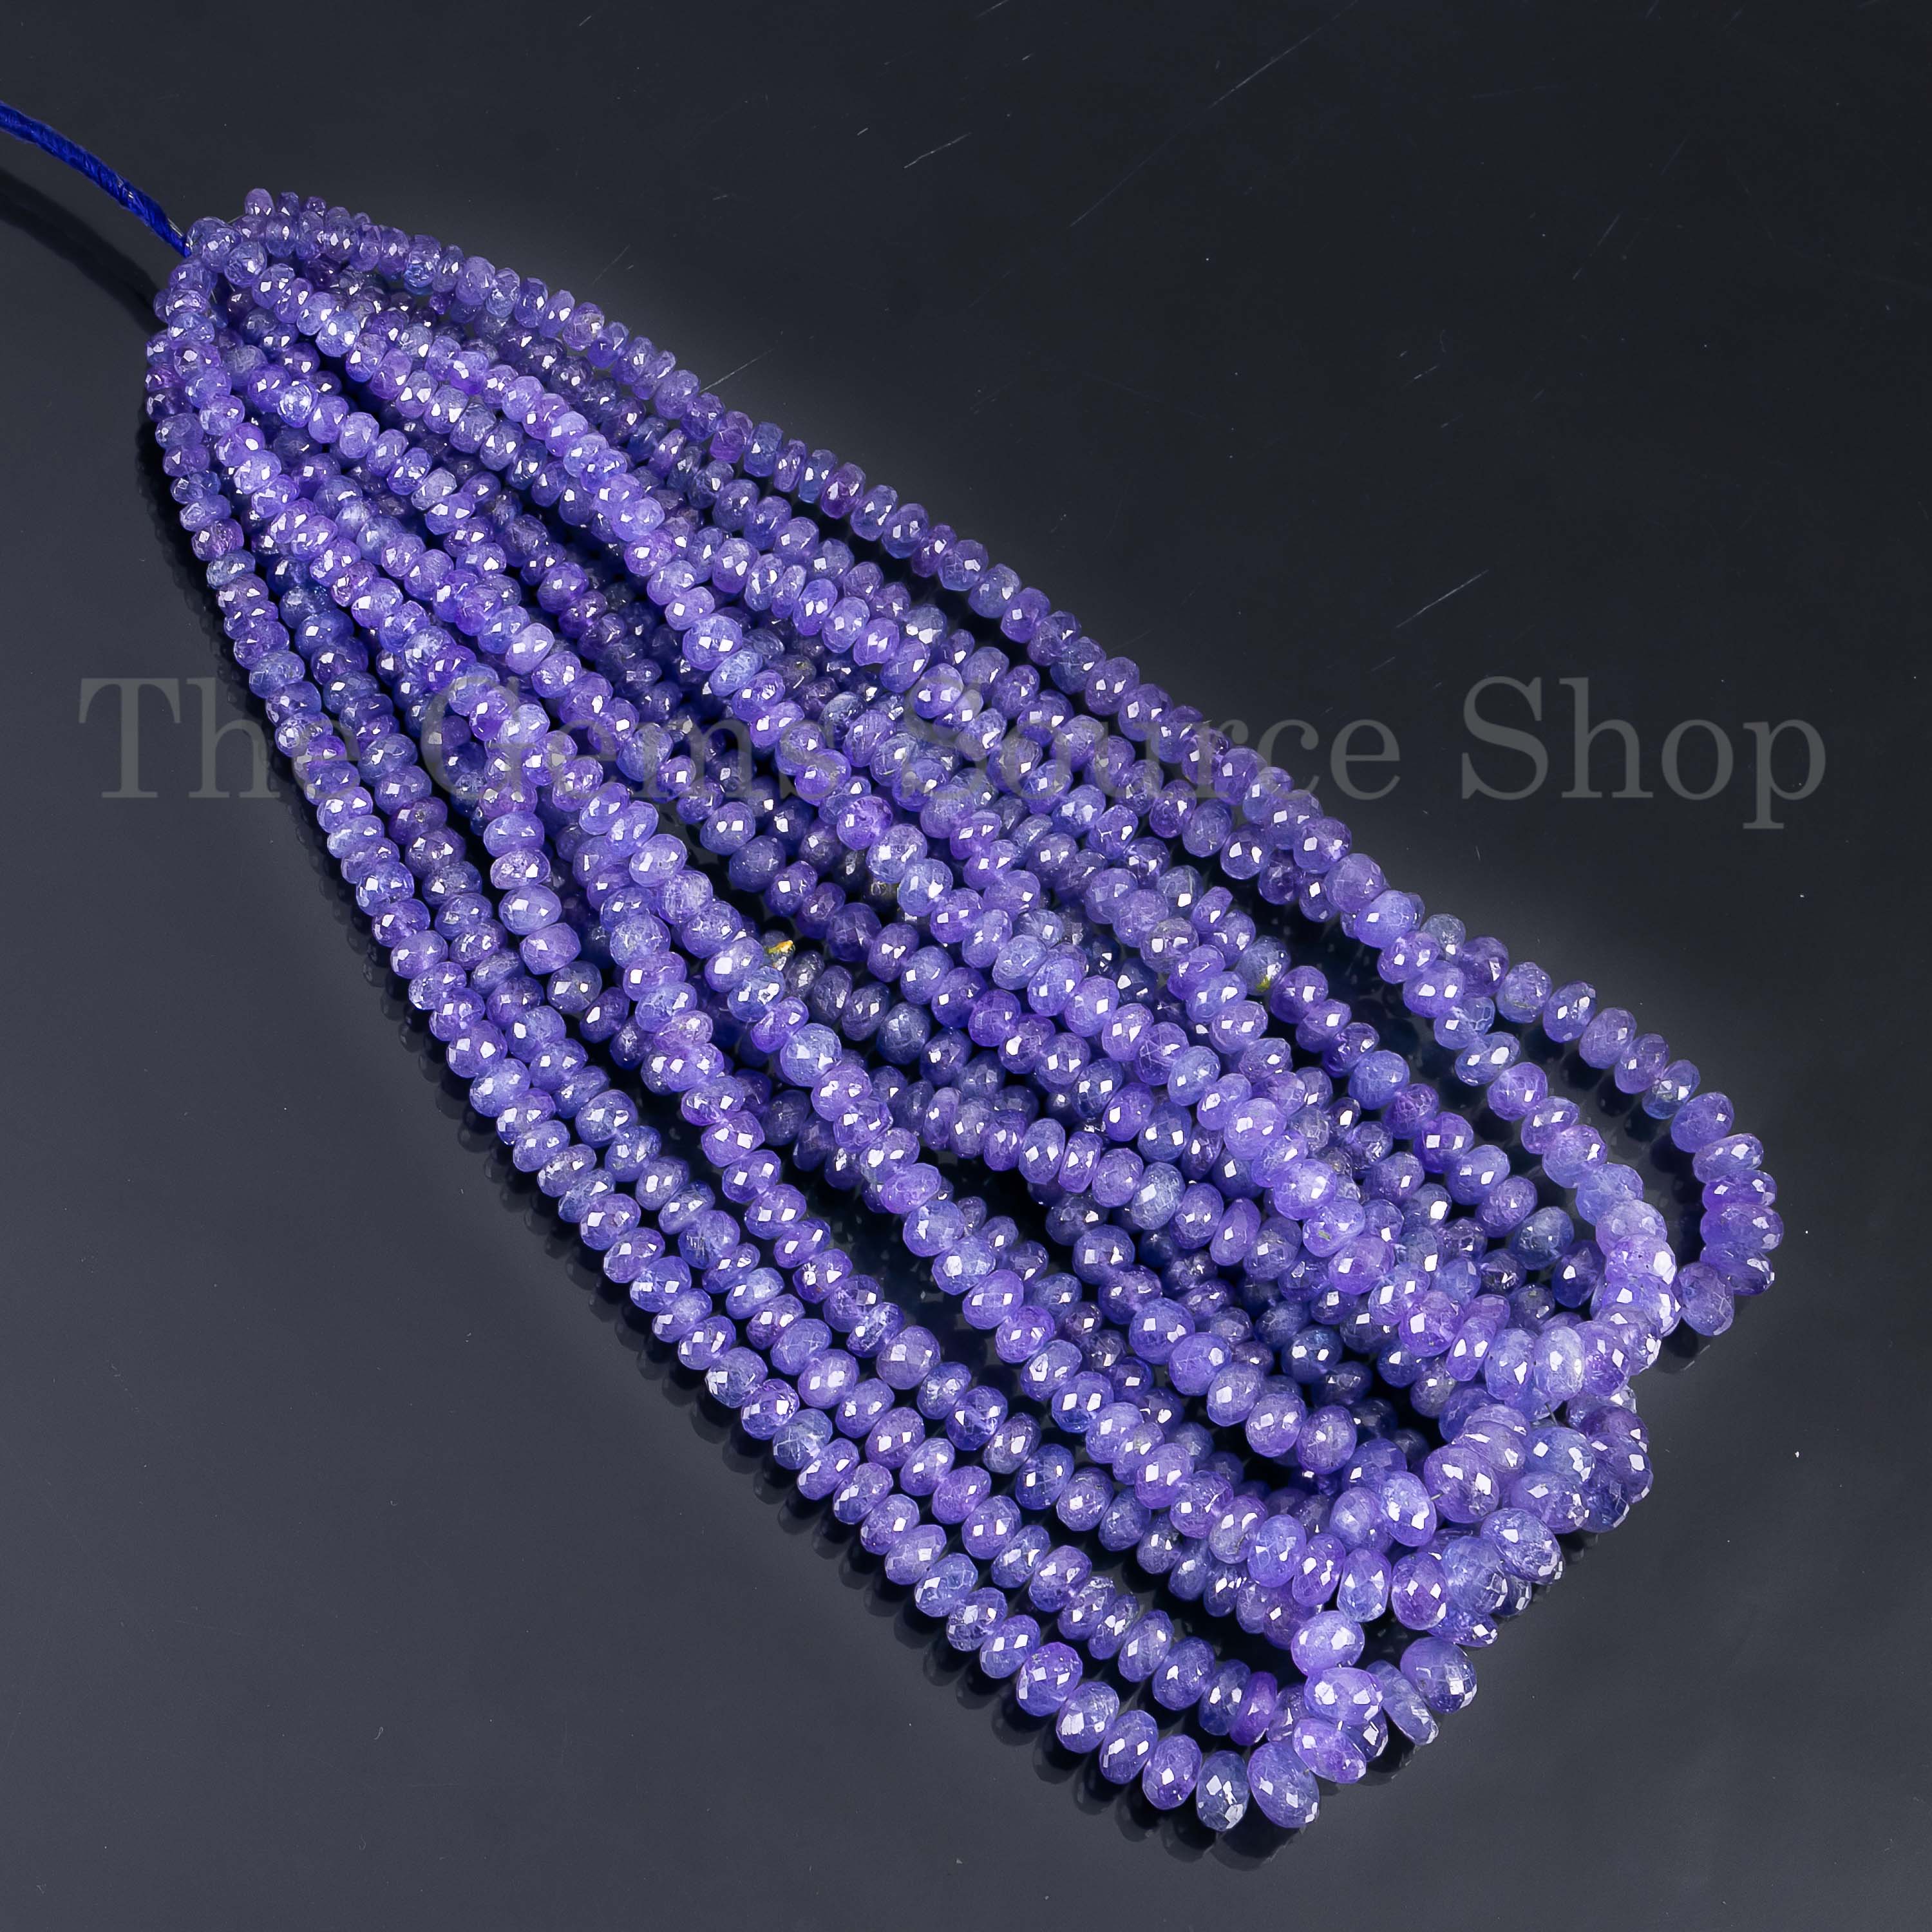 Tanzanite Faceted Rondelle Beads, Tanzanite Faceted Beads, Tanzanite Gemstone Beads, Wholesale Beads